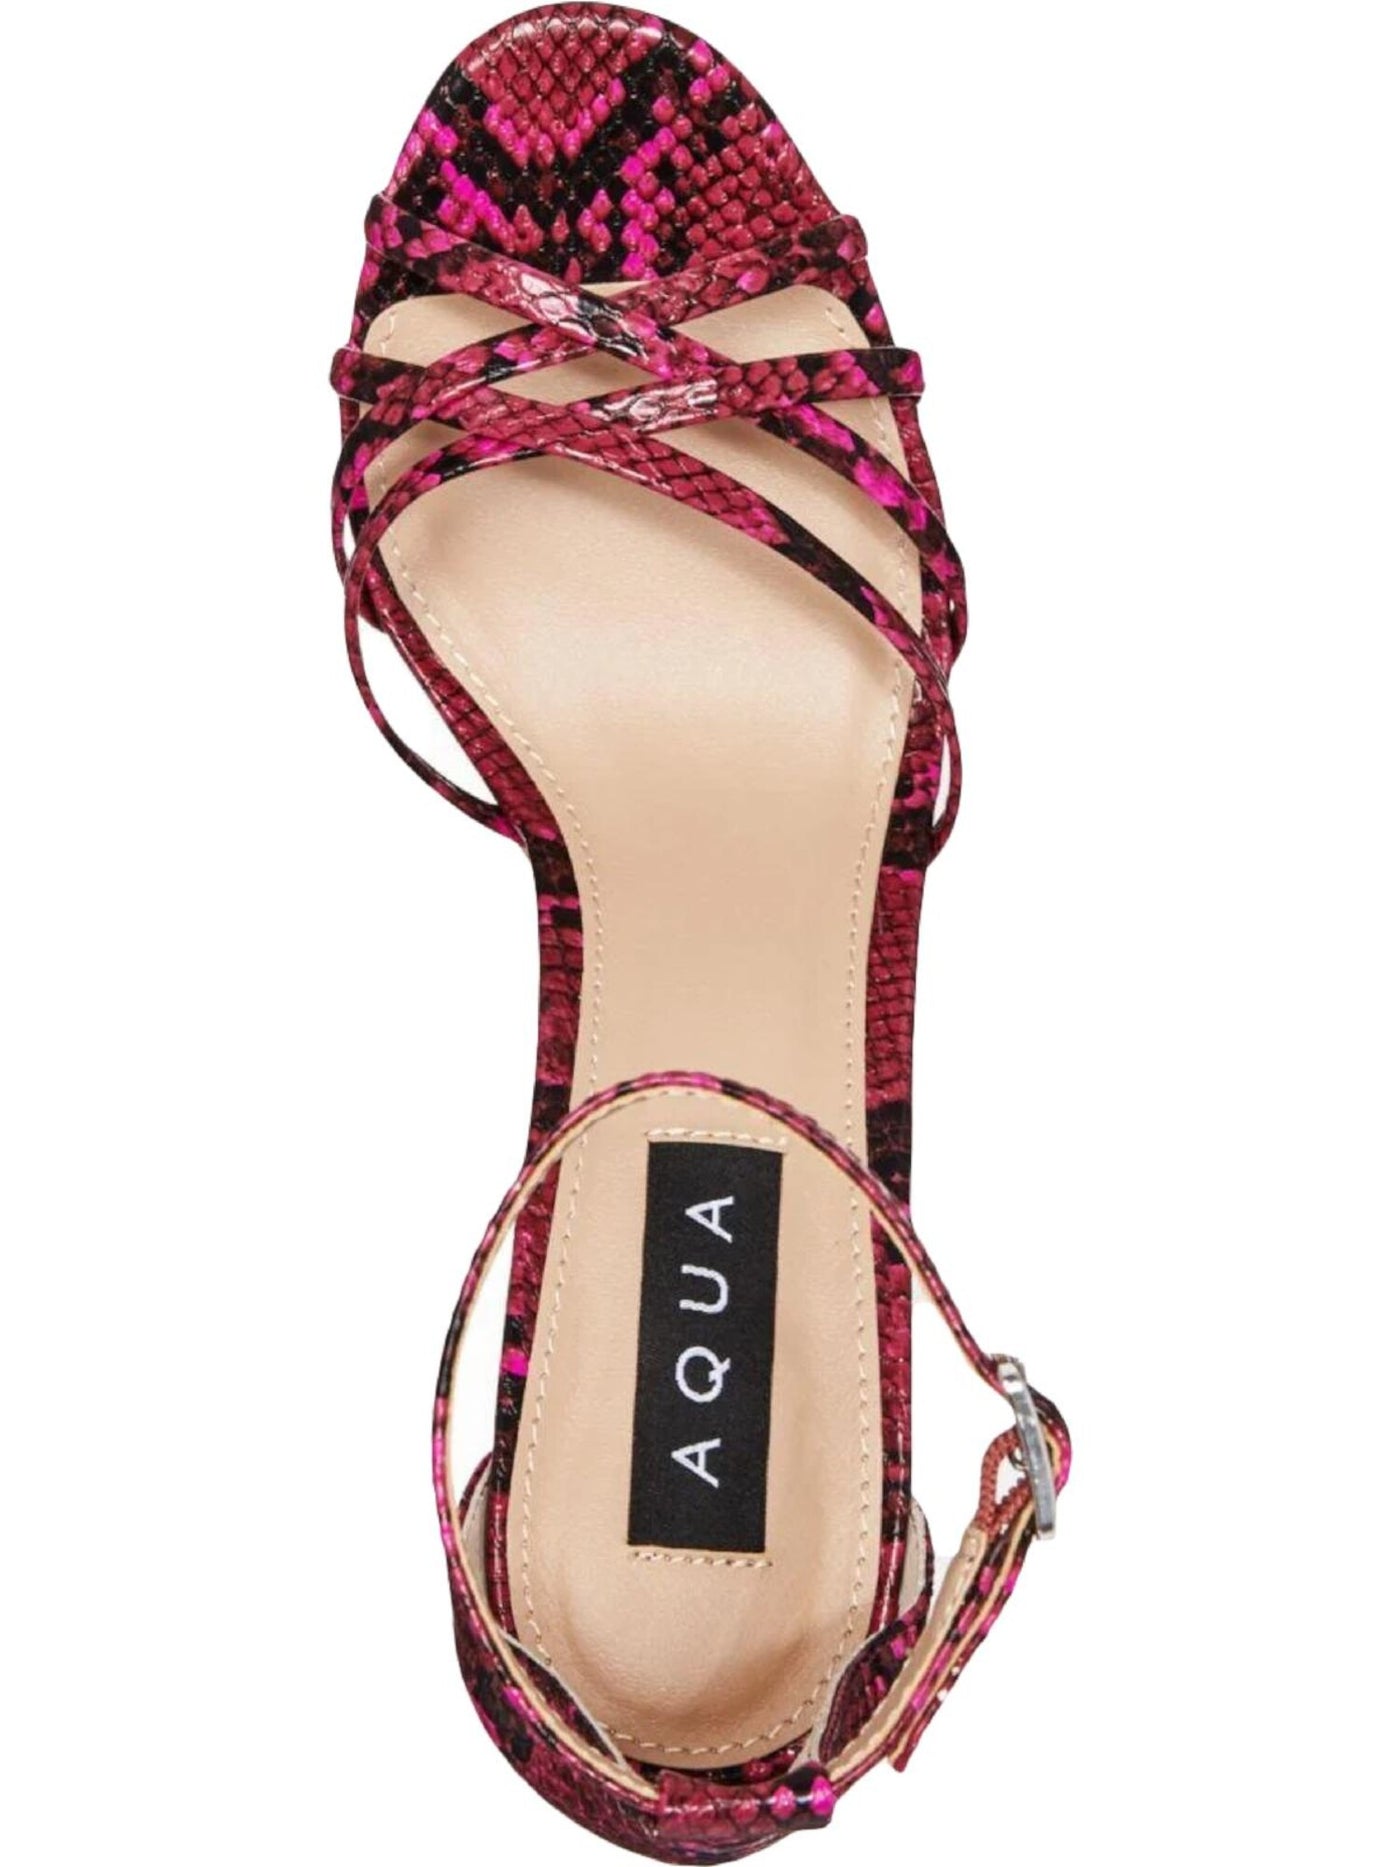 AQUA Womens Pink Snakeskin 1" Platform Cork-Like Ankle Strap Cushioned Milo Round Toe Block Heel Buckle Dress Sandals Shoes 6 M